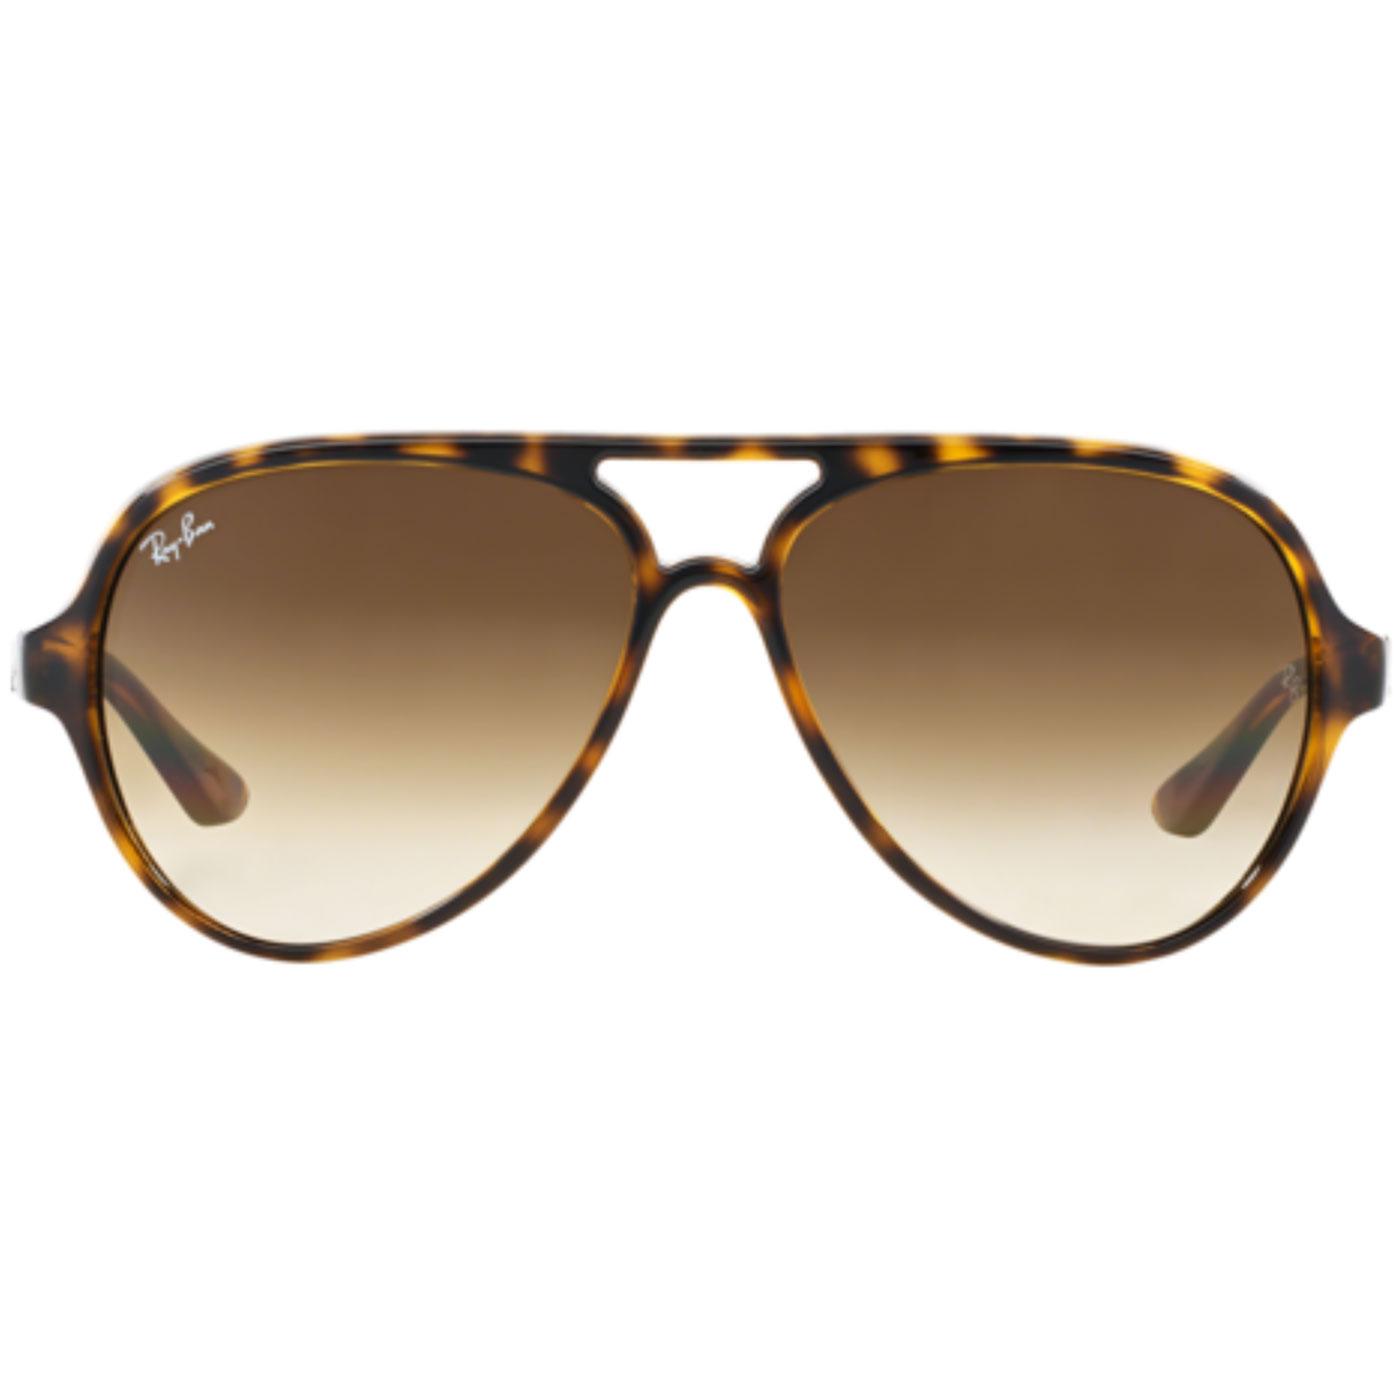 Cats 5000 Aviator Sunglasses | Ray-Ban Retro Sixties Mod Brown Shades